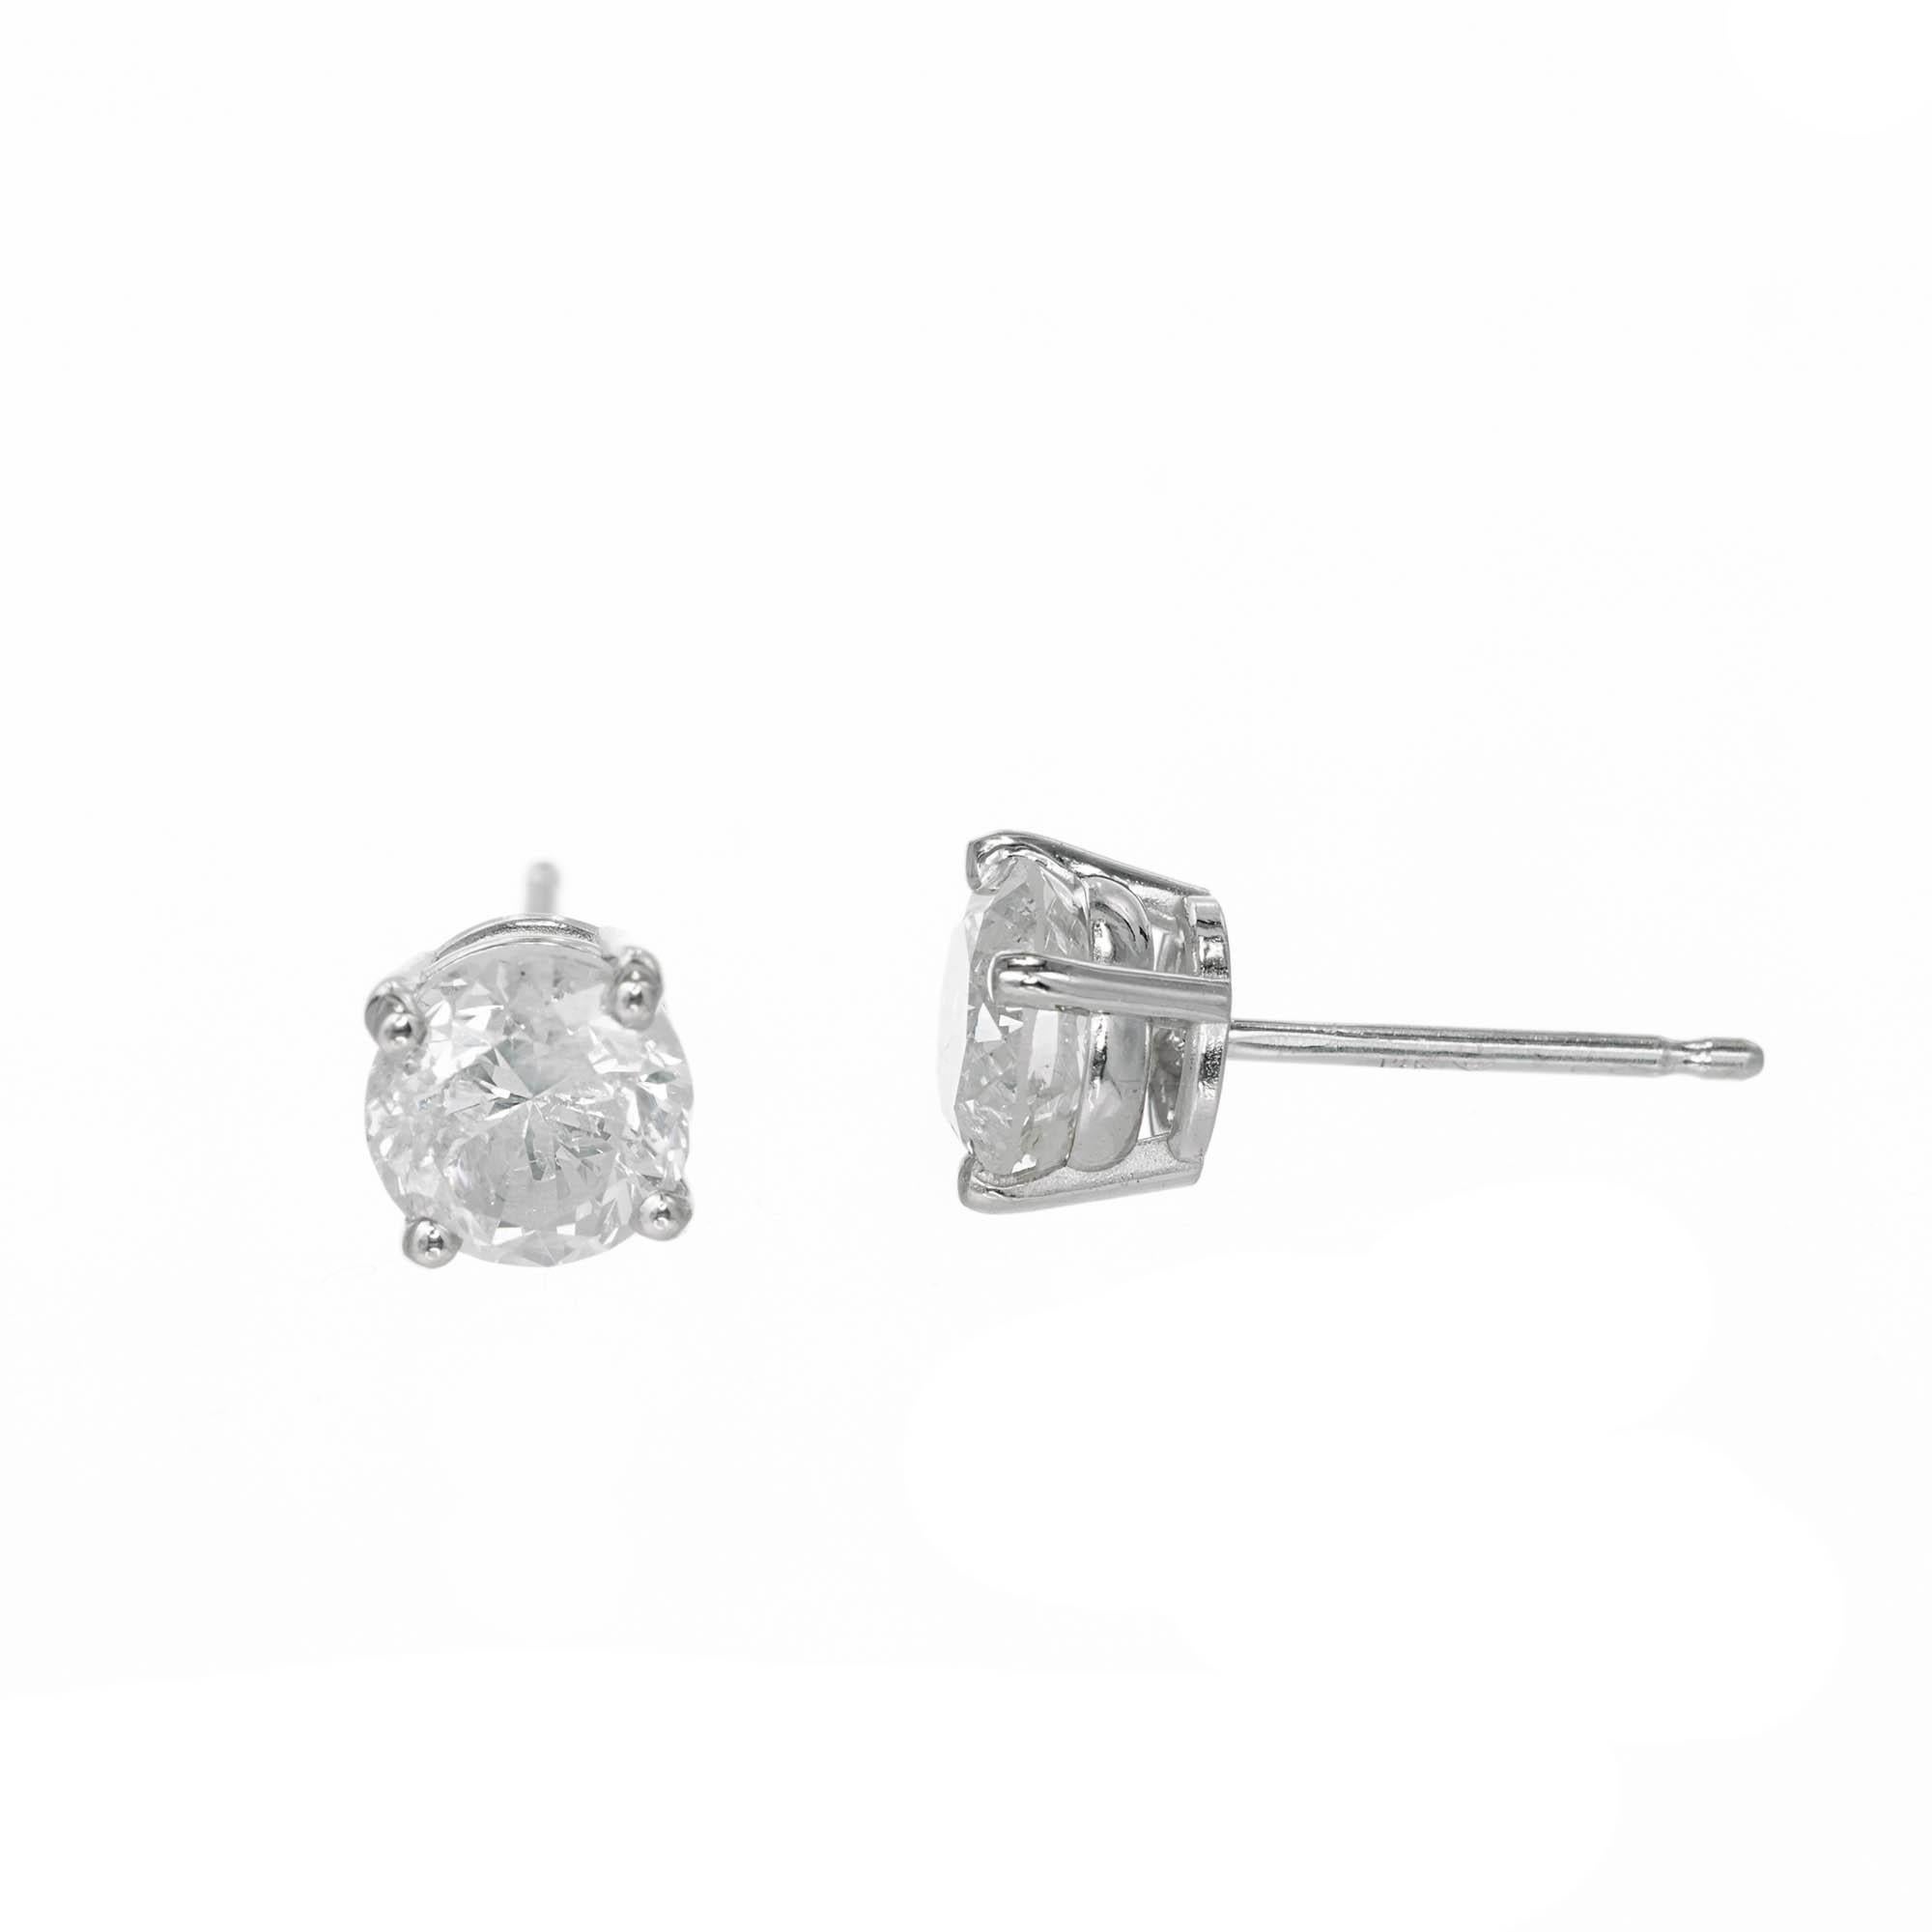 Round brilliant cut diamond stud earrings set in a 14k white gold 4 prong setting

1 round diamond I2 5.42-5.40 x 3.8 approximate .75 carats EGL #  US 314545201J
1 round diamond G-H I2 5.42-5.38 x3.65 approximate .71 carats EGL # US 314545201J
14k